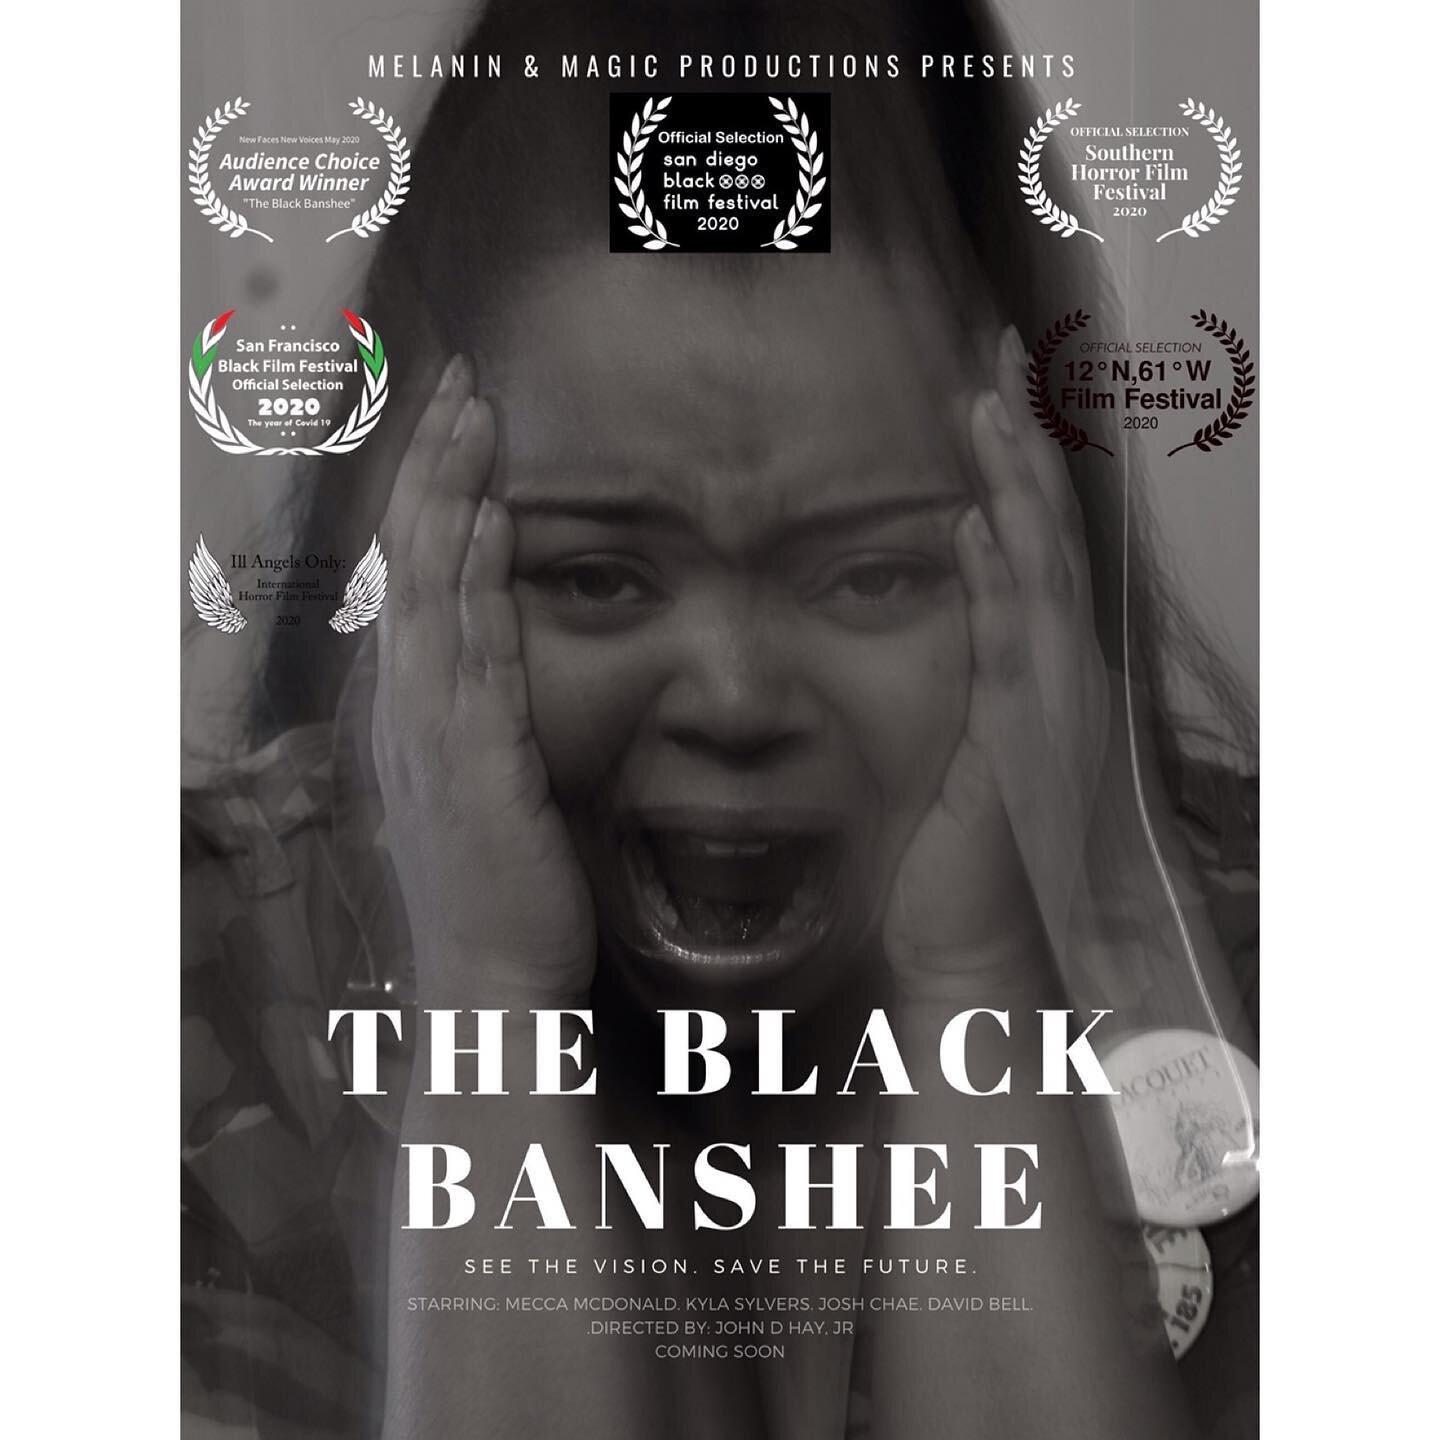 Black Banshee screenings!!
TONIGHT: #illangelsonly Film Fest 8pm (link in bio)
Sat 10/31 @chocolateboxoffice (NYC) and @southernhorror (ATL)
Mon 11/02 @1261filmfestival (Grenada)
Let&rsquo;s go @theblackbansheefilm !!
.
.
.
.
.
.
#nyc  #atlanta #gren